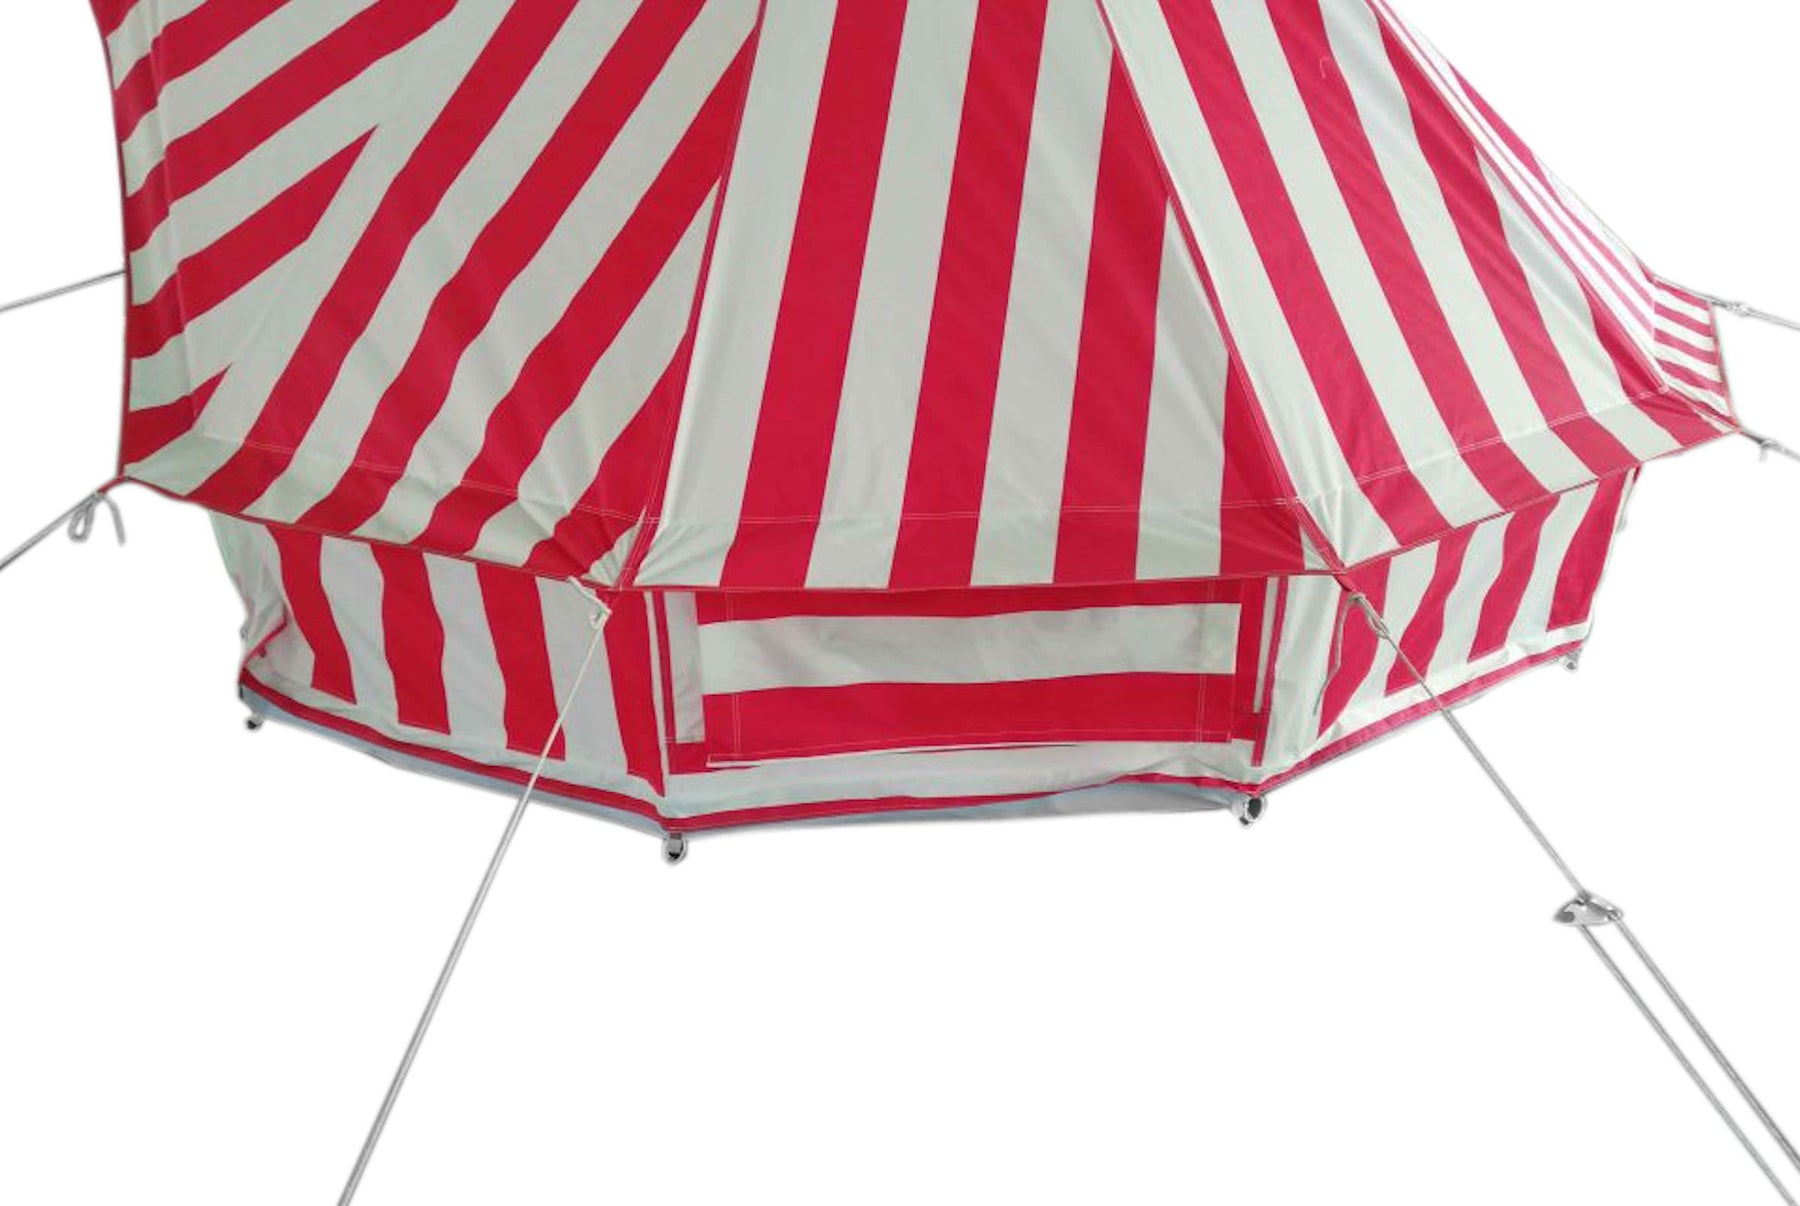 4M "Summer Fete" Striped Bell Tent